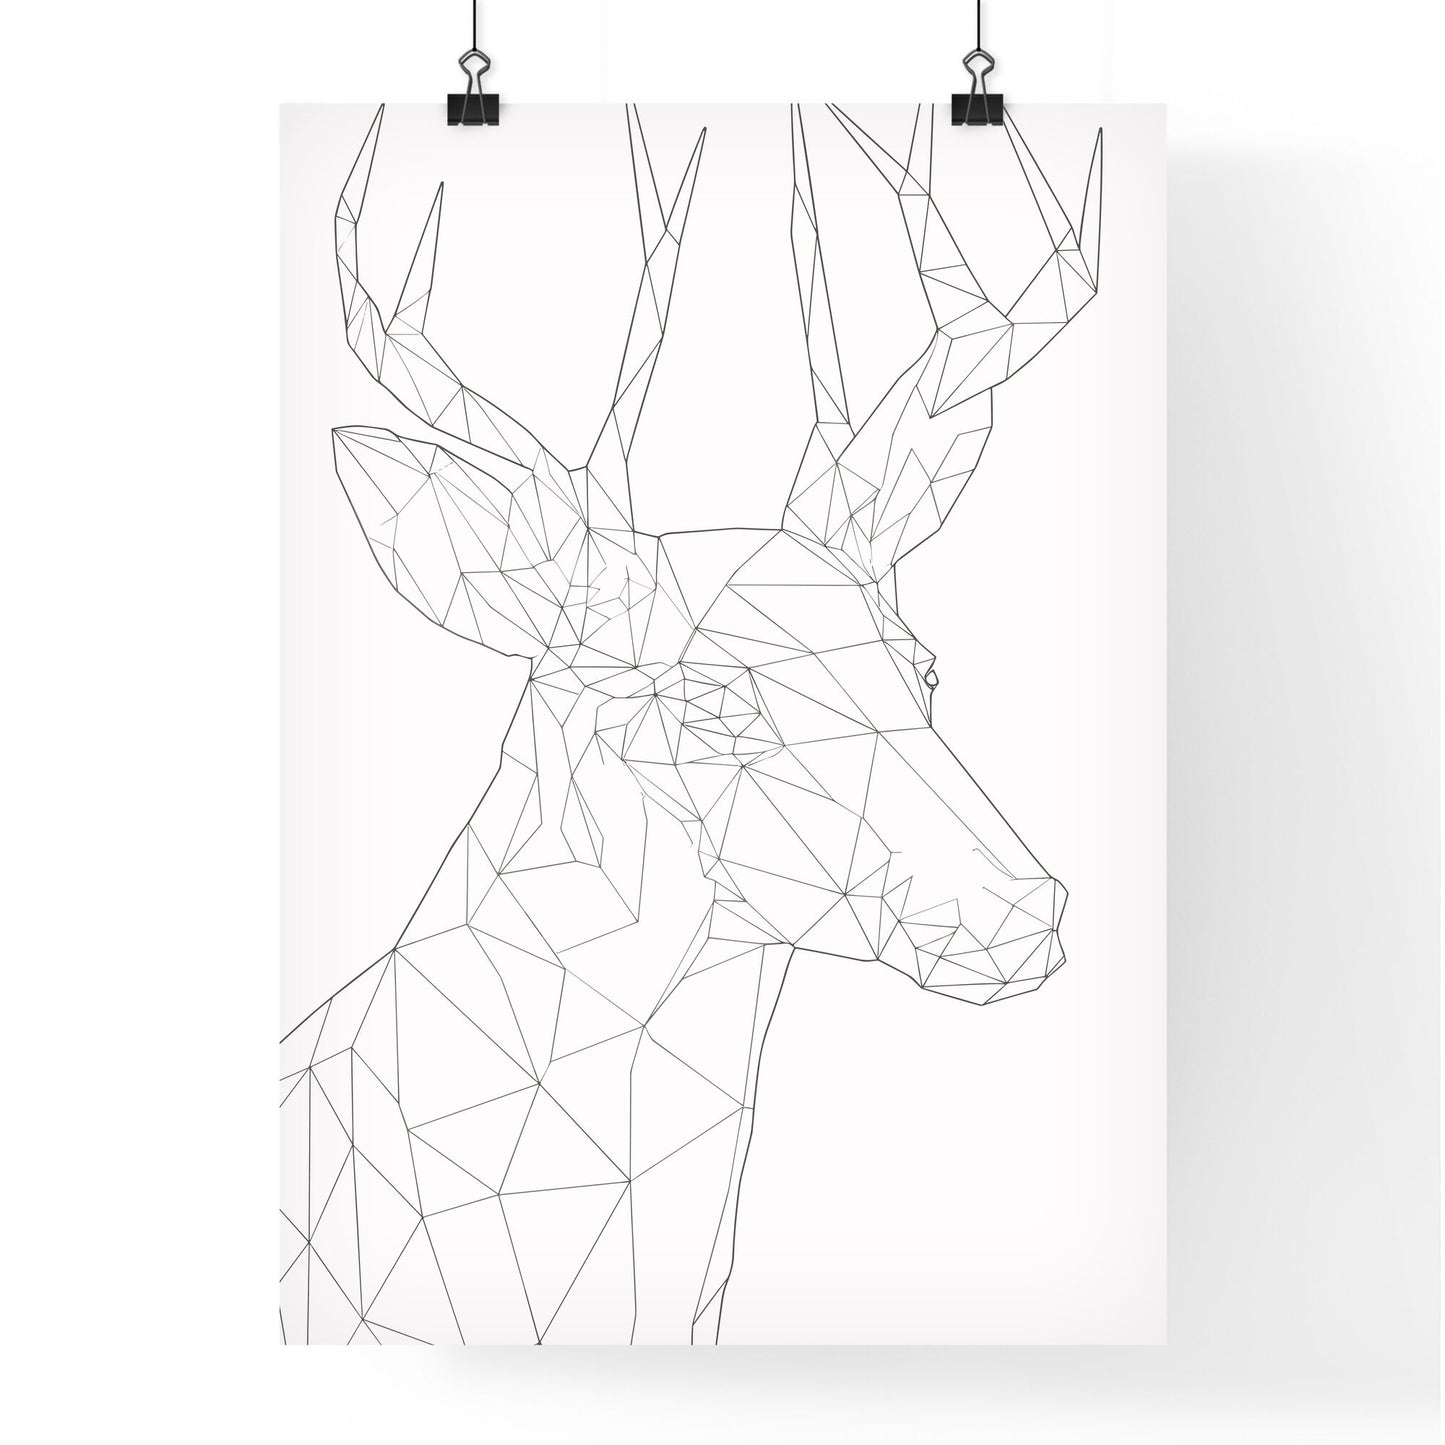 Low Poly Deer Logo Woodcut Print Minimal Art - A Drawing Of A Deer Default Title